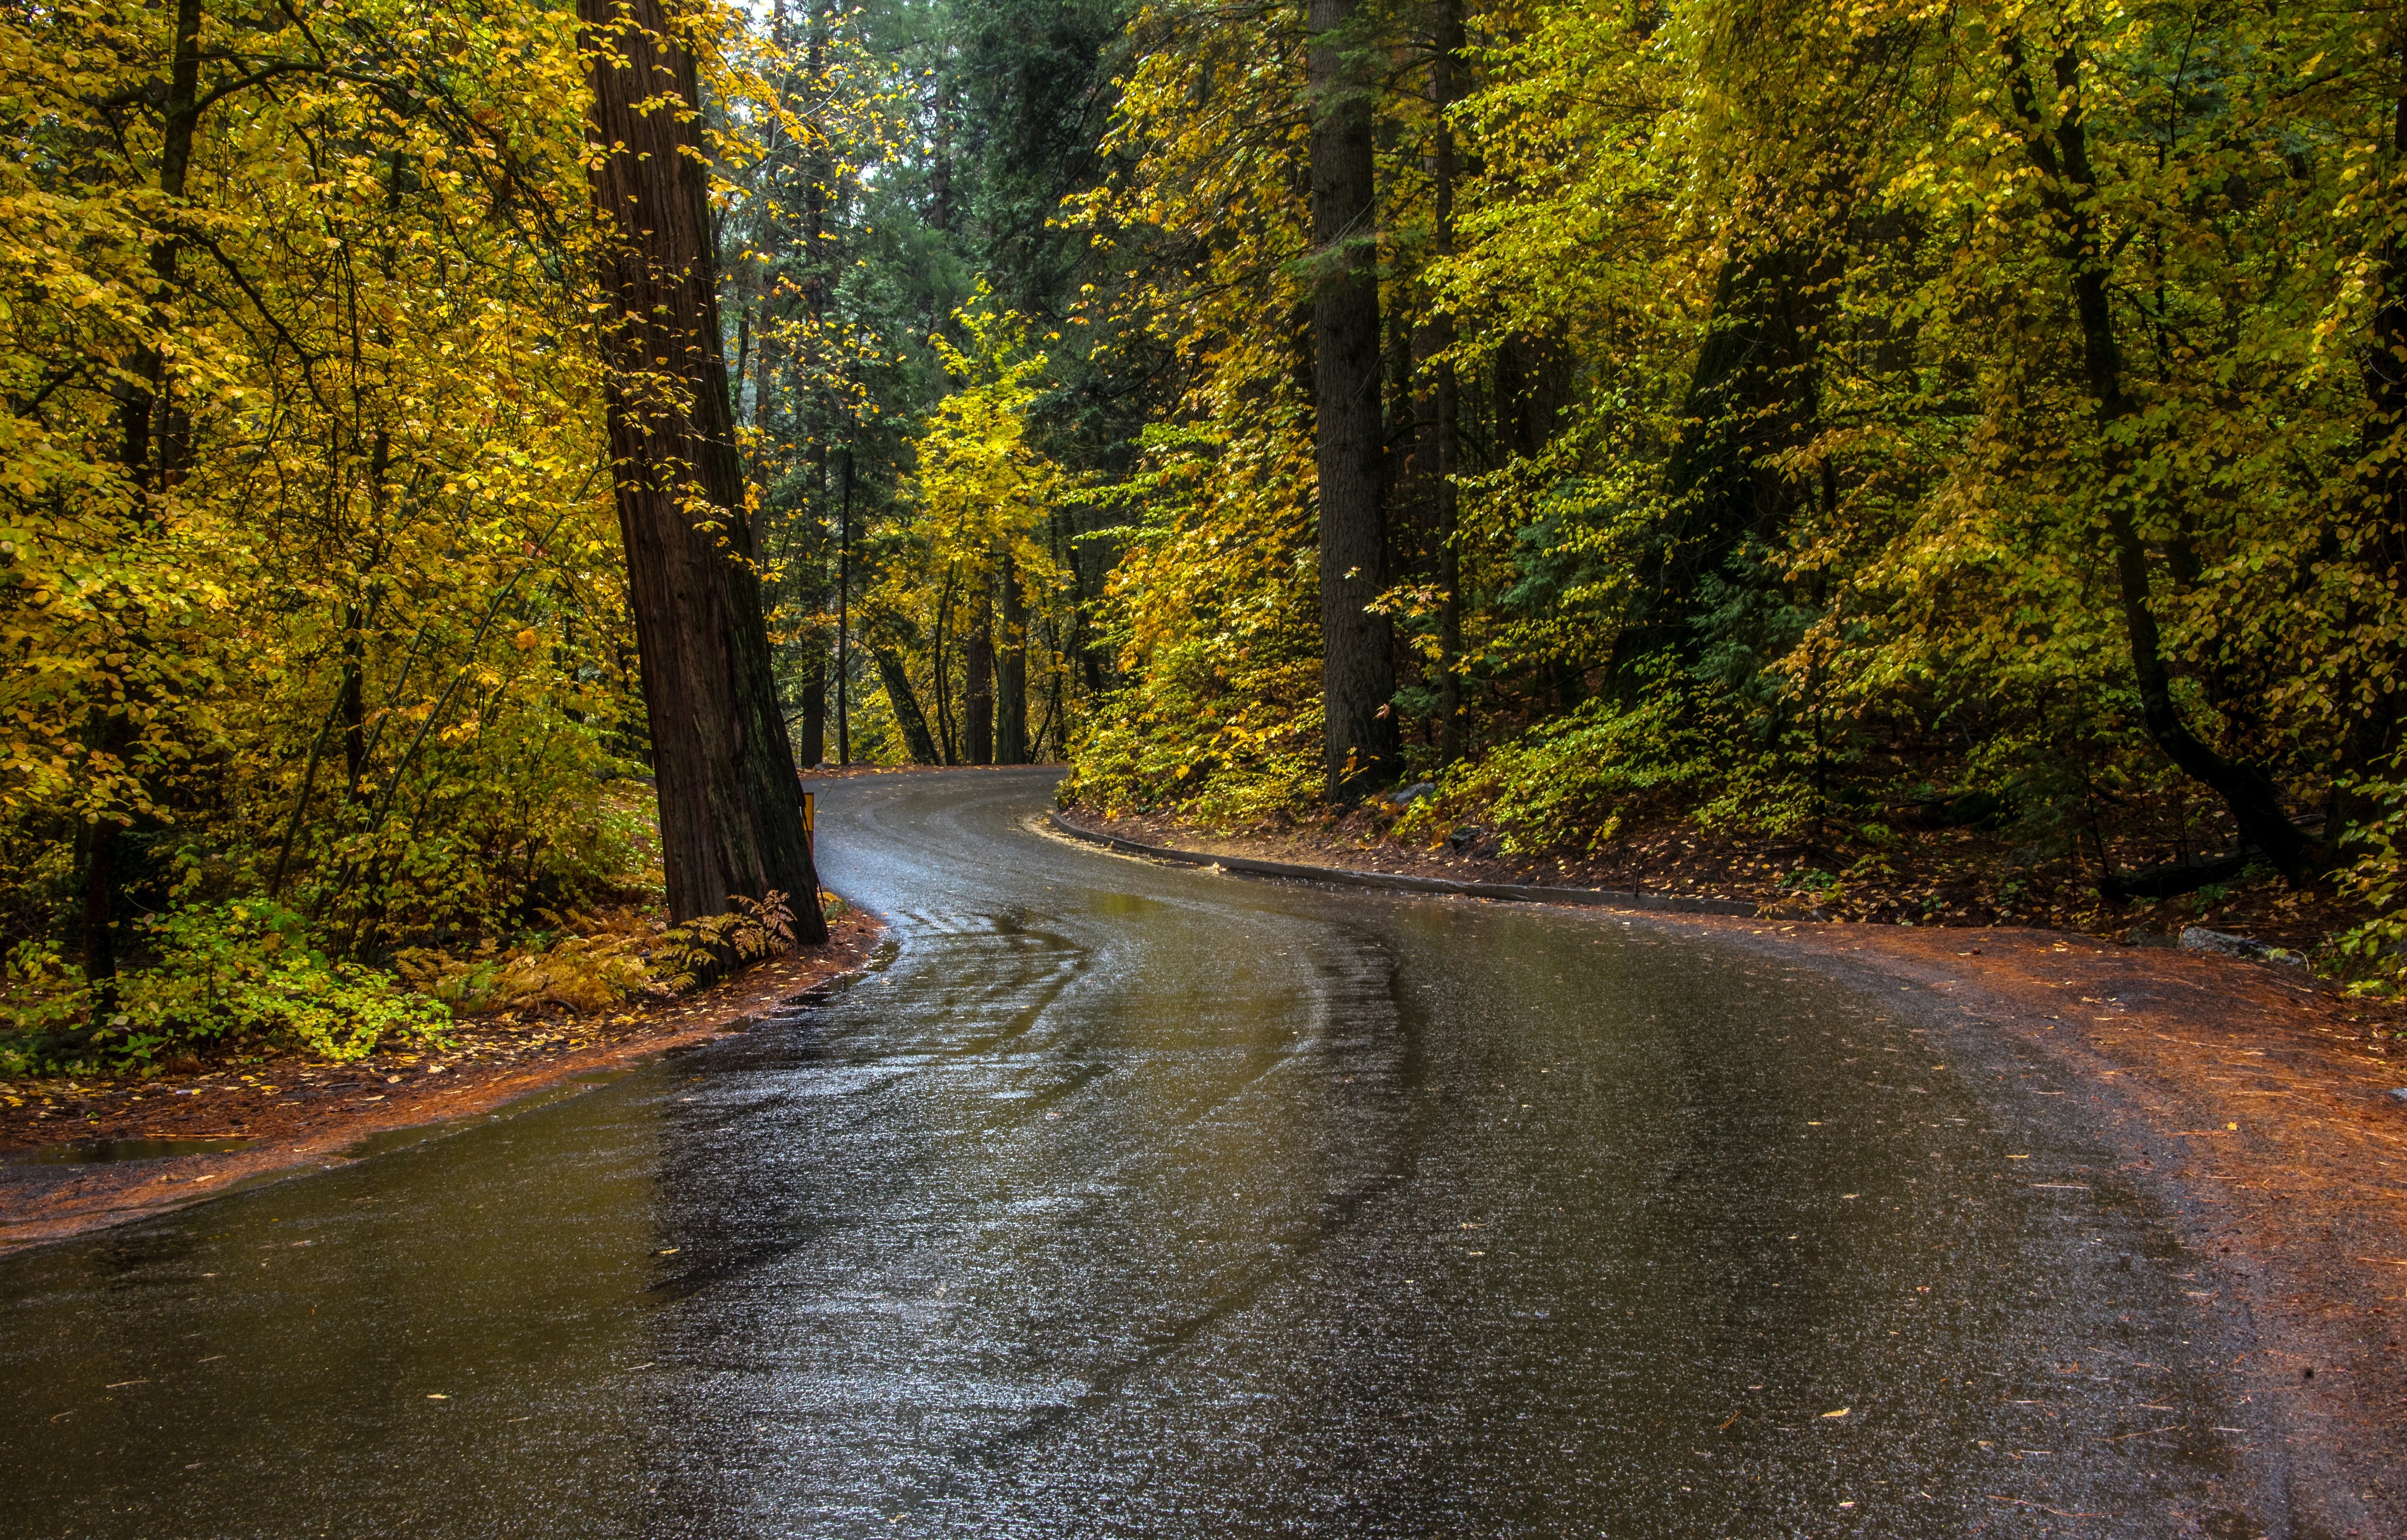 General 5000x3200 street wet street road forest fall foliage asphalt yellow